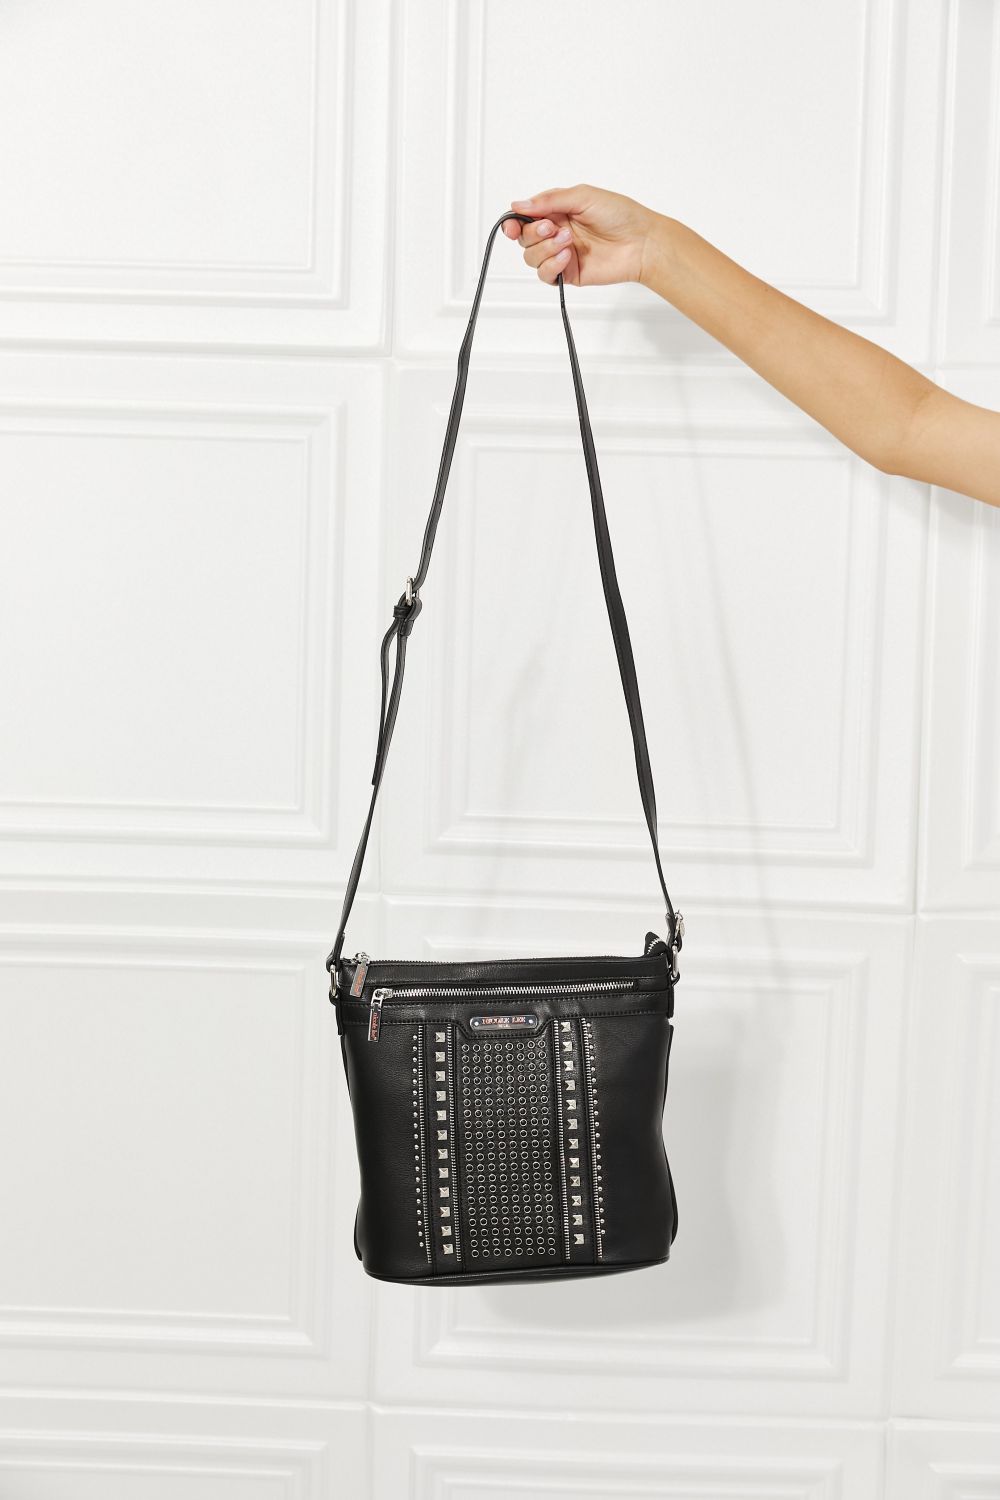 Nicole Lee USA Love Handbag free shipping -Oh Em Gee Boutique